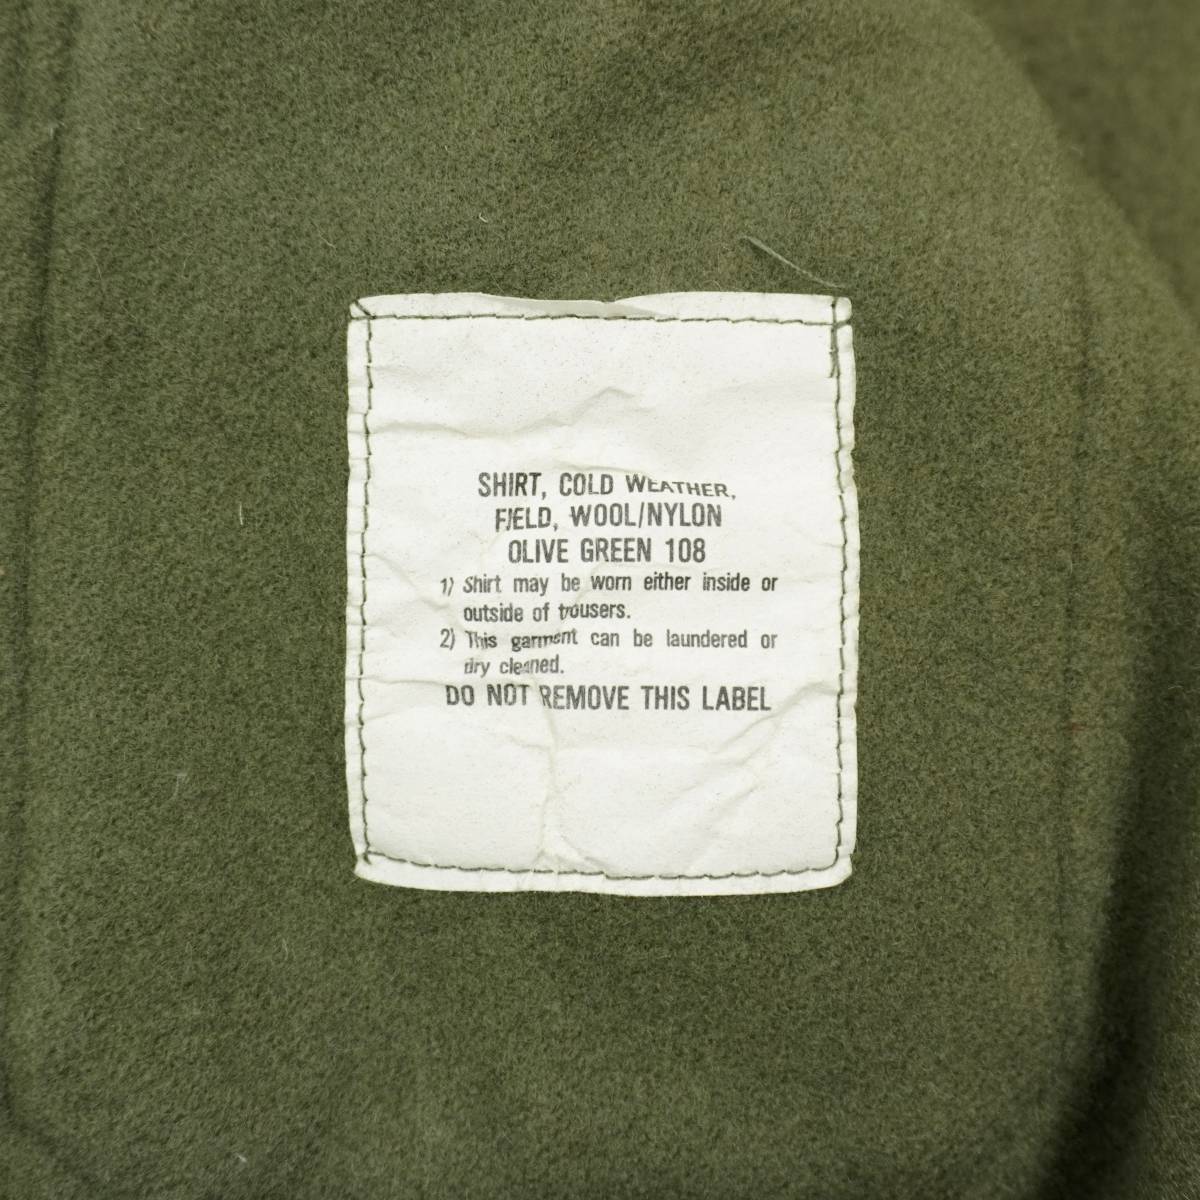 US ARMY OG-108 Wool Shirts 1982s MEDIUM SHIRT23195 Vintage アメリカ軍 ウールシャツ 1980年代 アメリカ製 ヴィンテージ 米軍実物